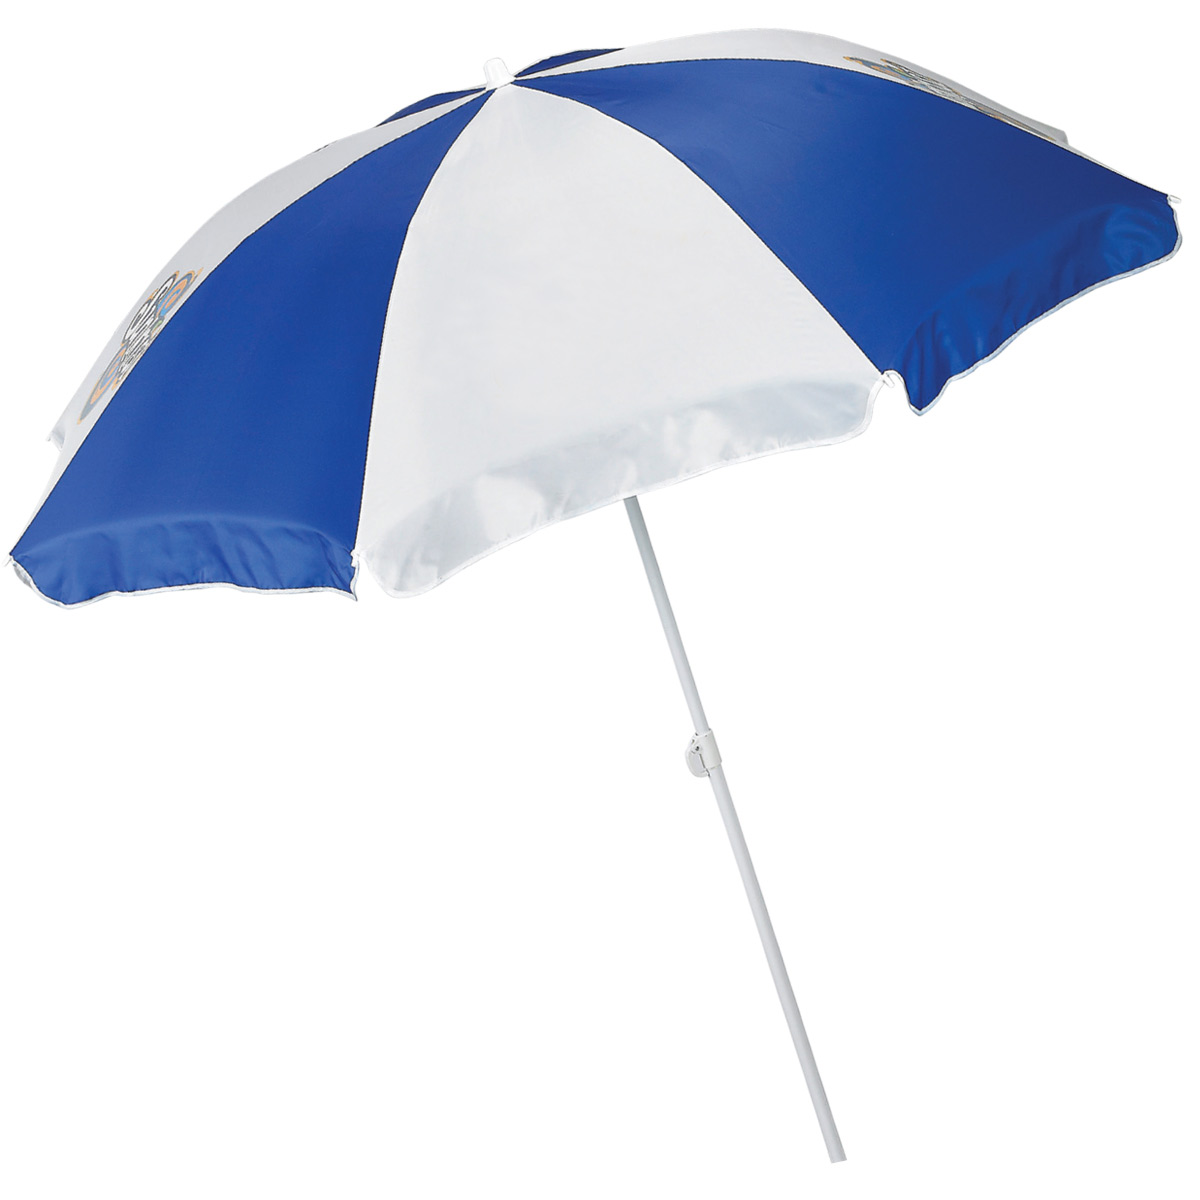 Style# 3230I – Beach Umbrella | Peerless Umbrella Company